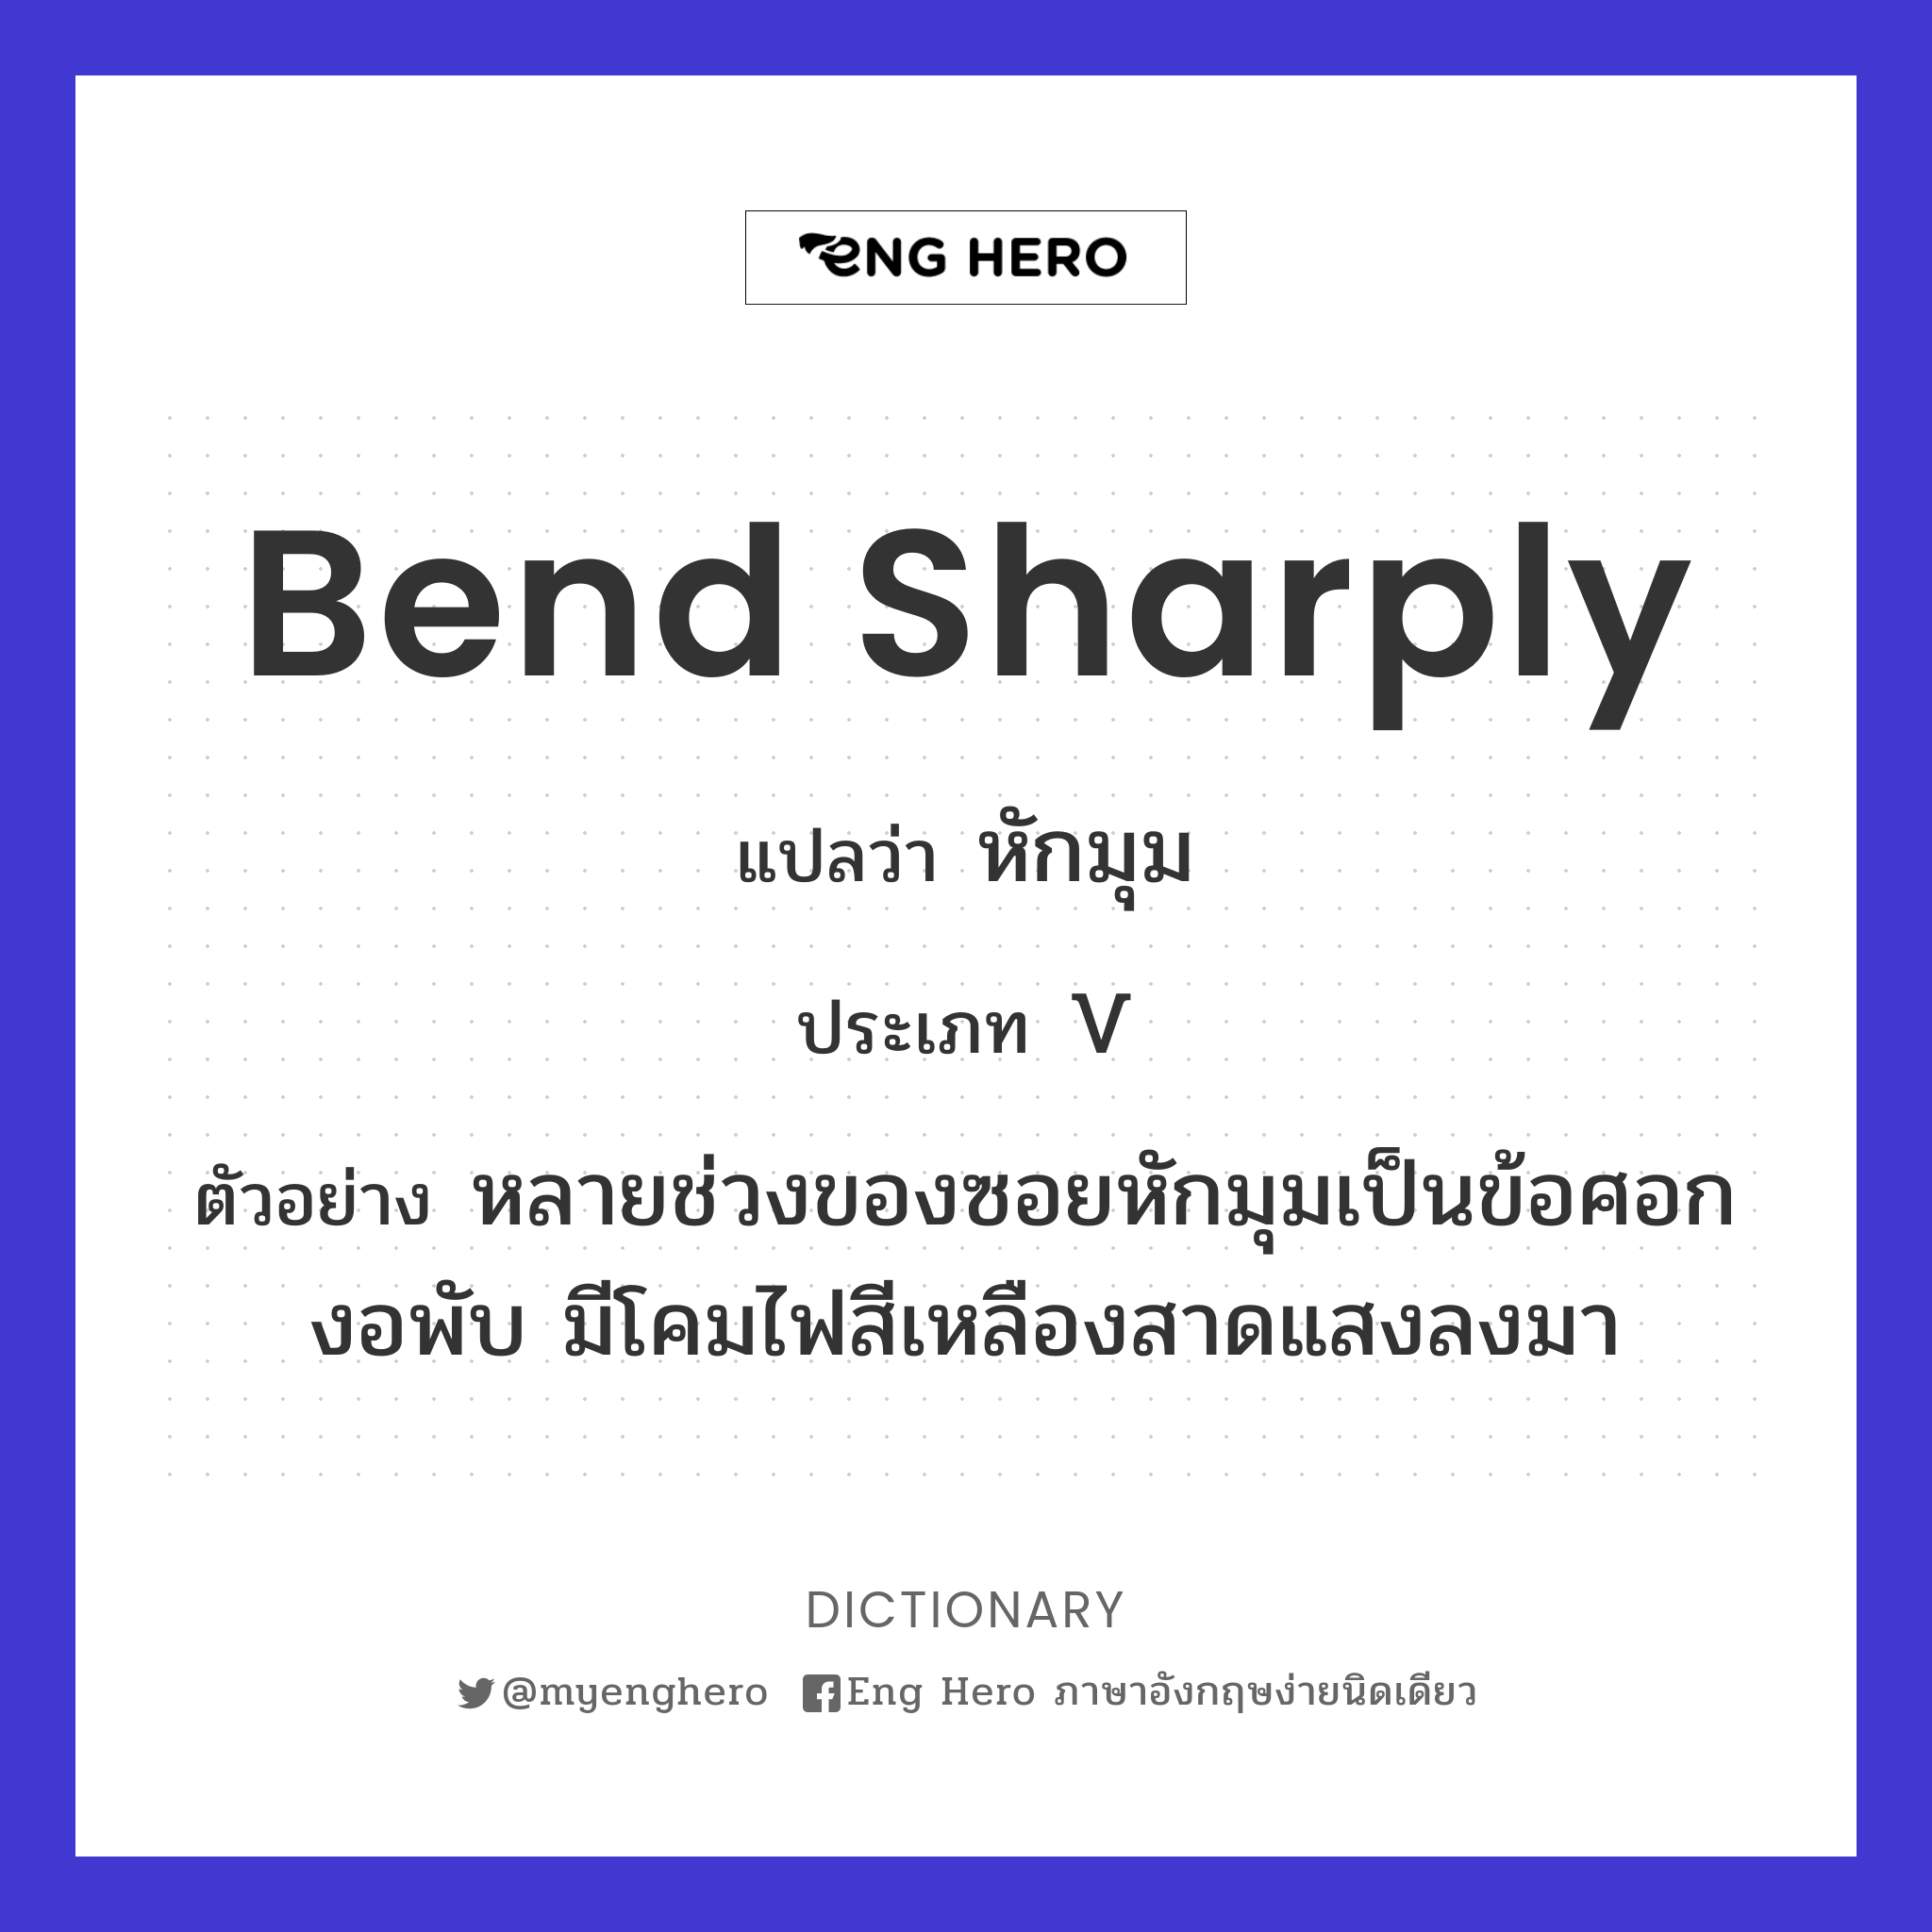 bend sharply